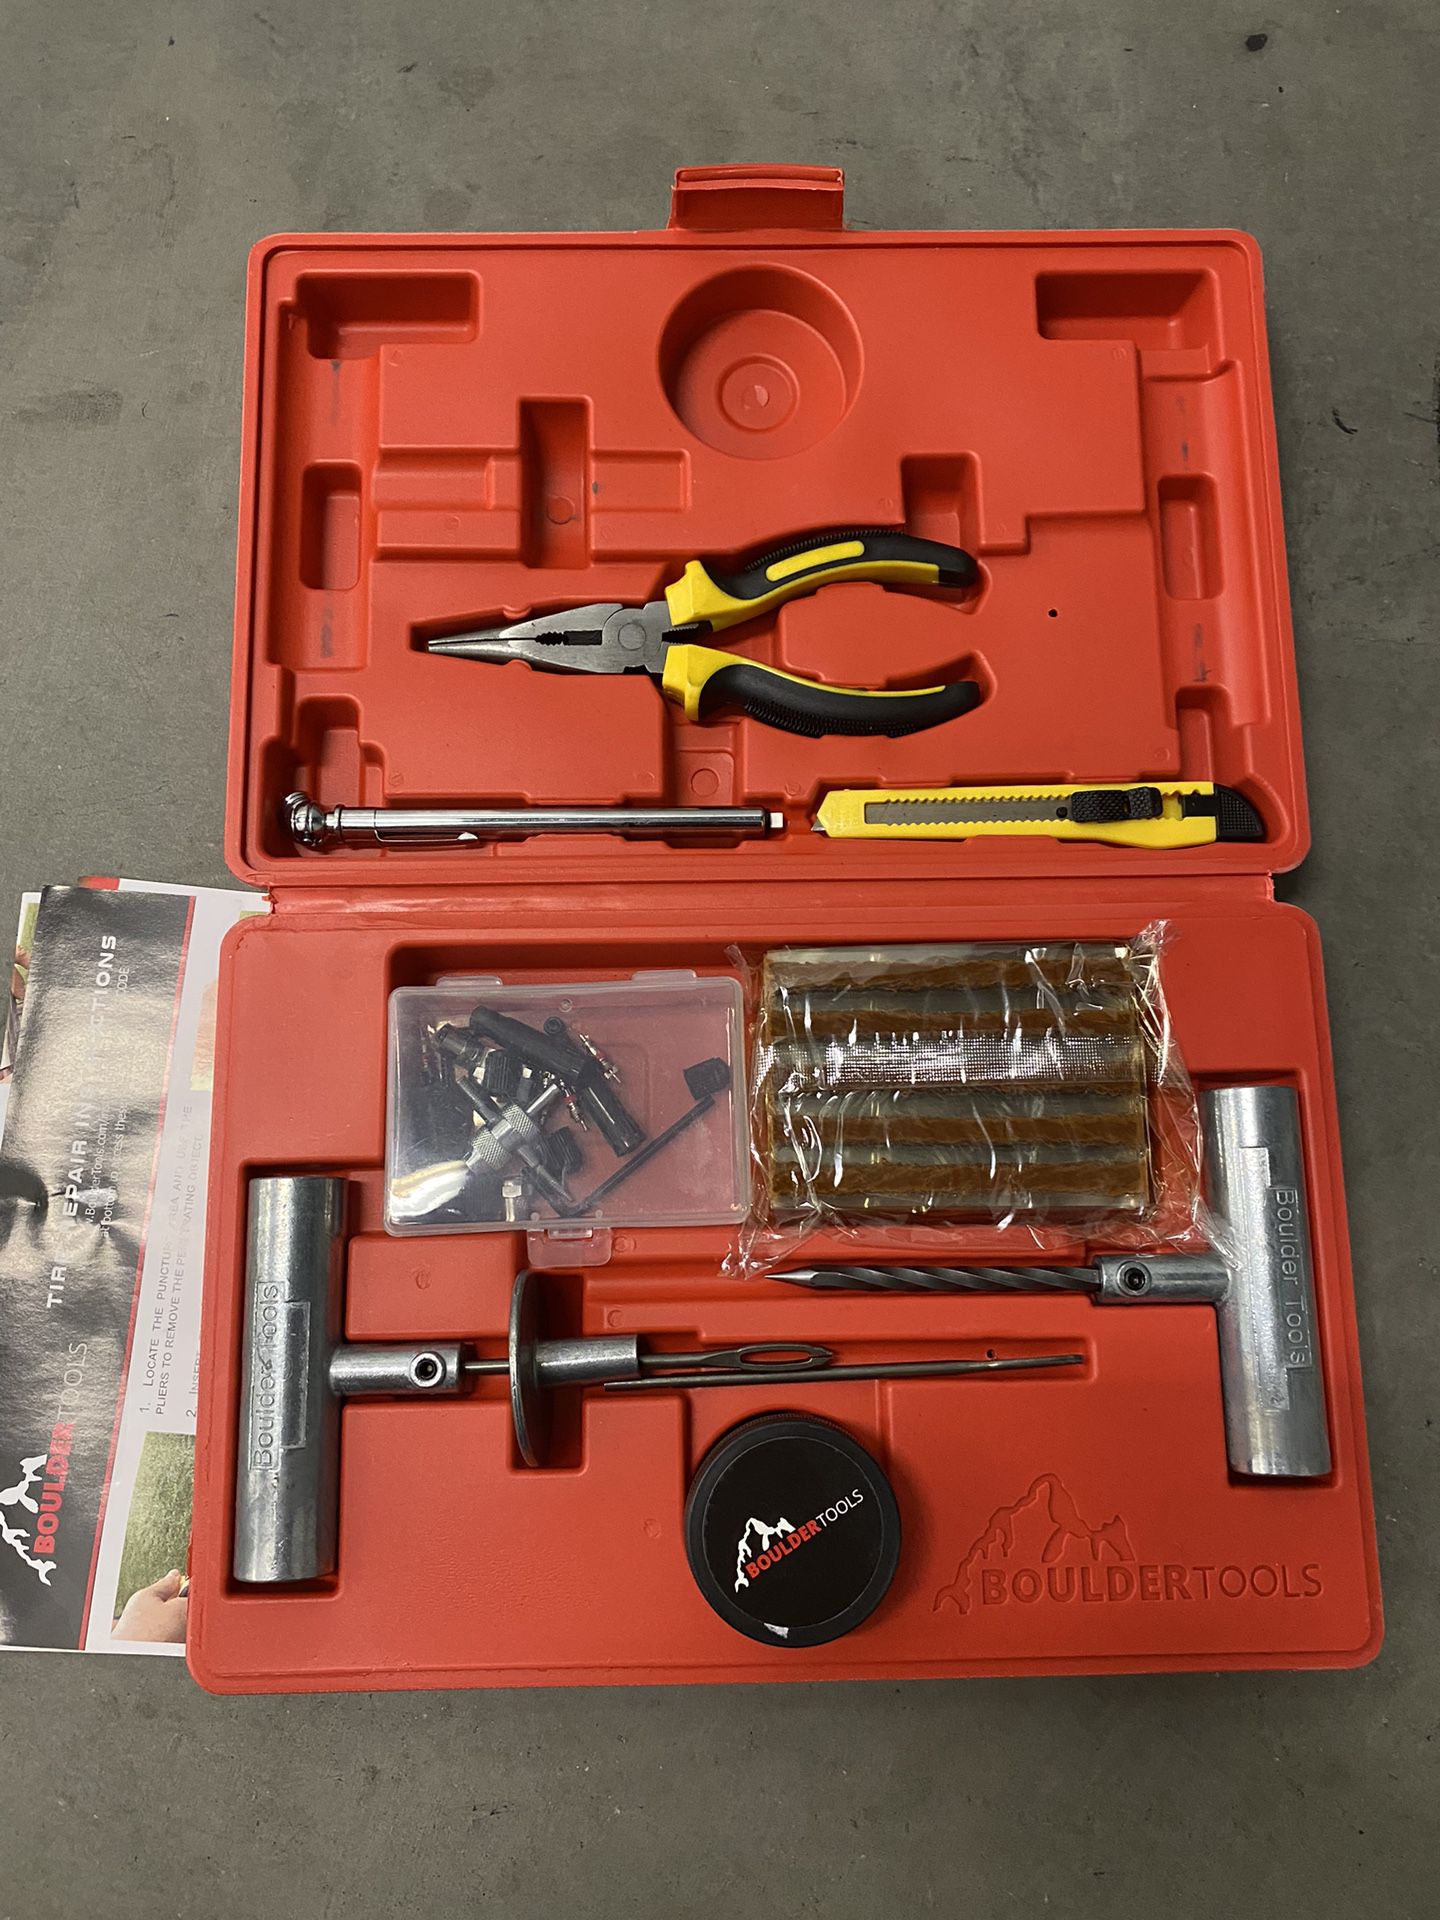 Boulder Tools Heavy Duty Tire Repair Kit 